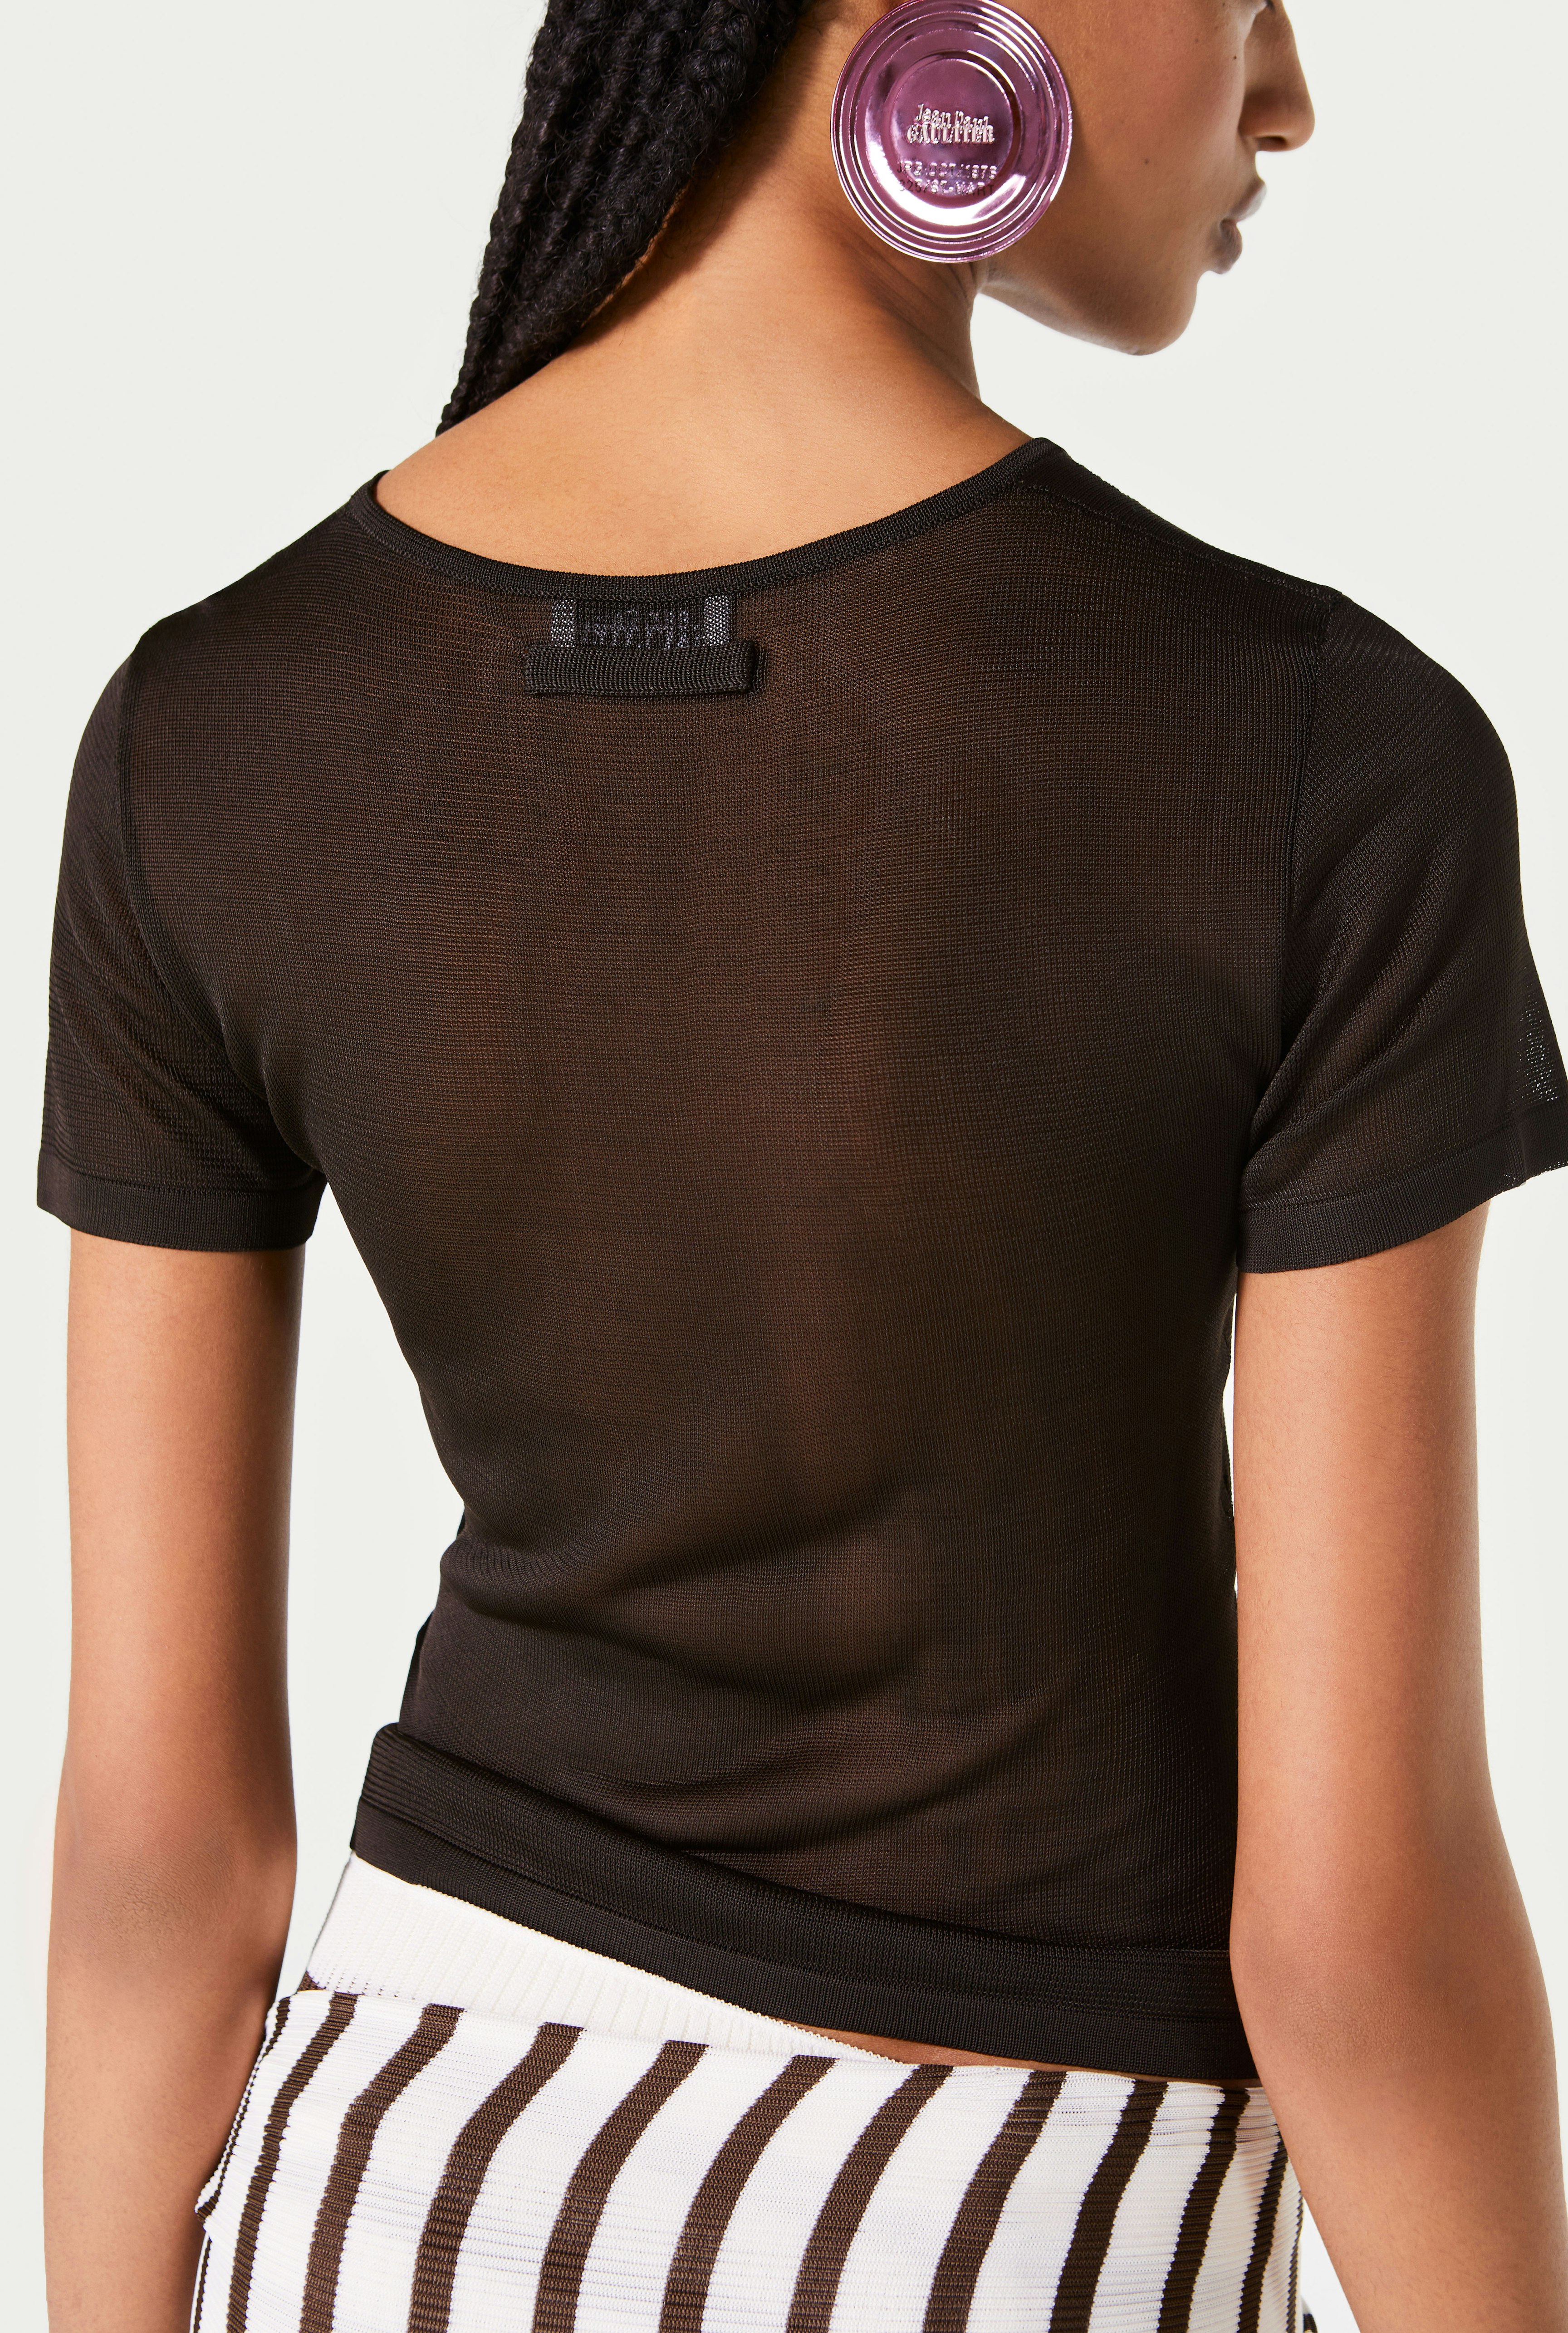 The Openworked JPG Heart T-Shirt Jean Paul Gaultier